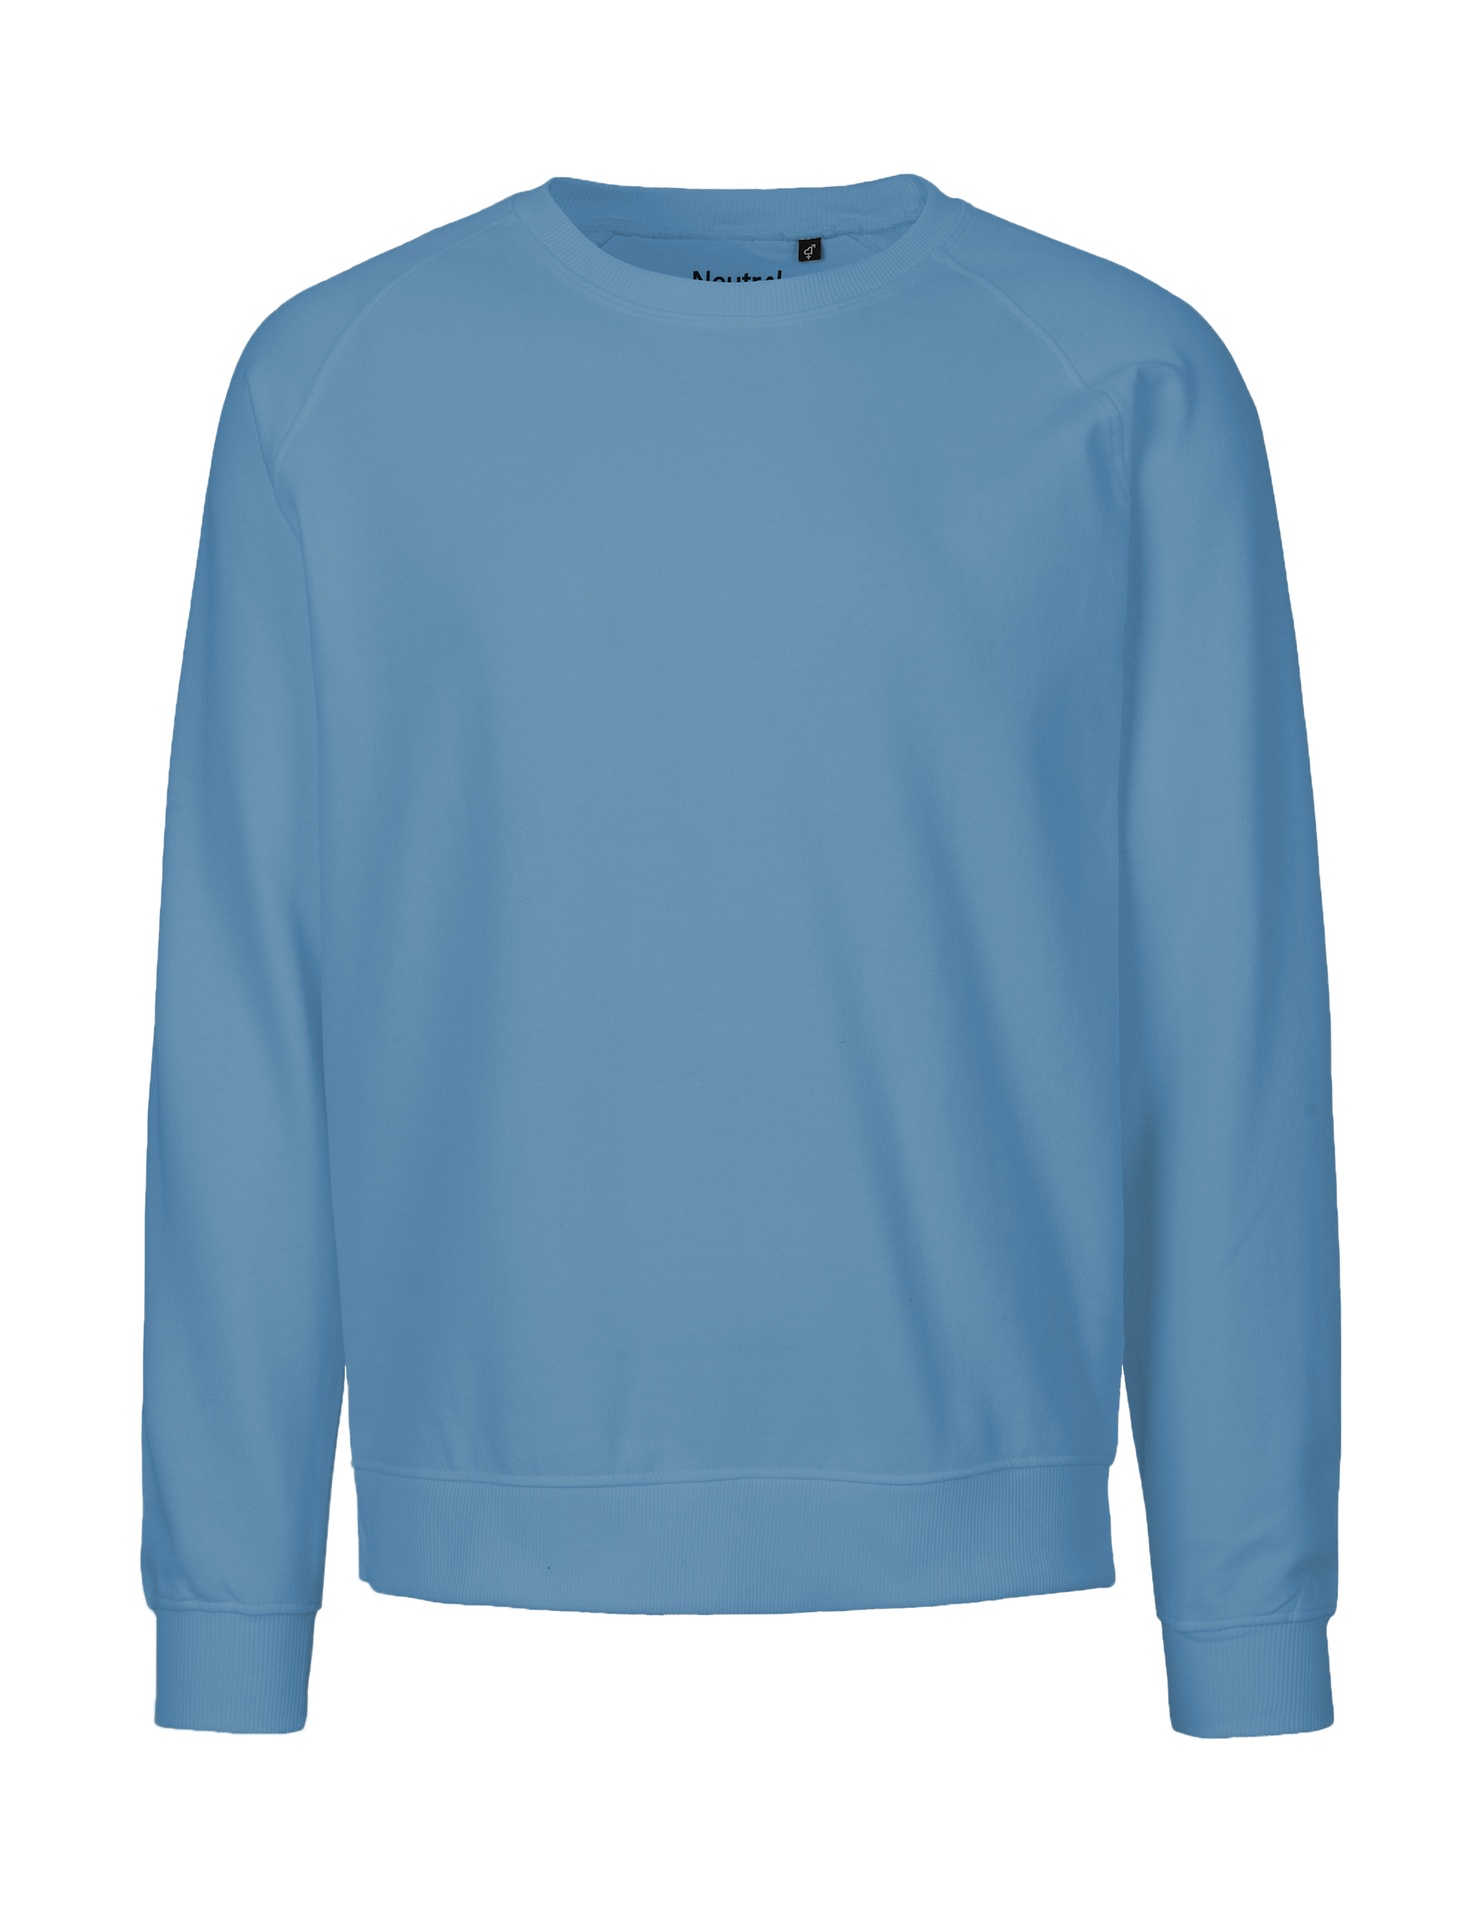 [PR/02832] Unisex Sweatshirt (Dusty Indigo 41, XS)